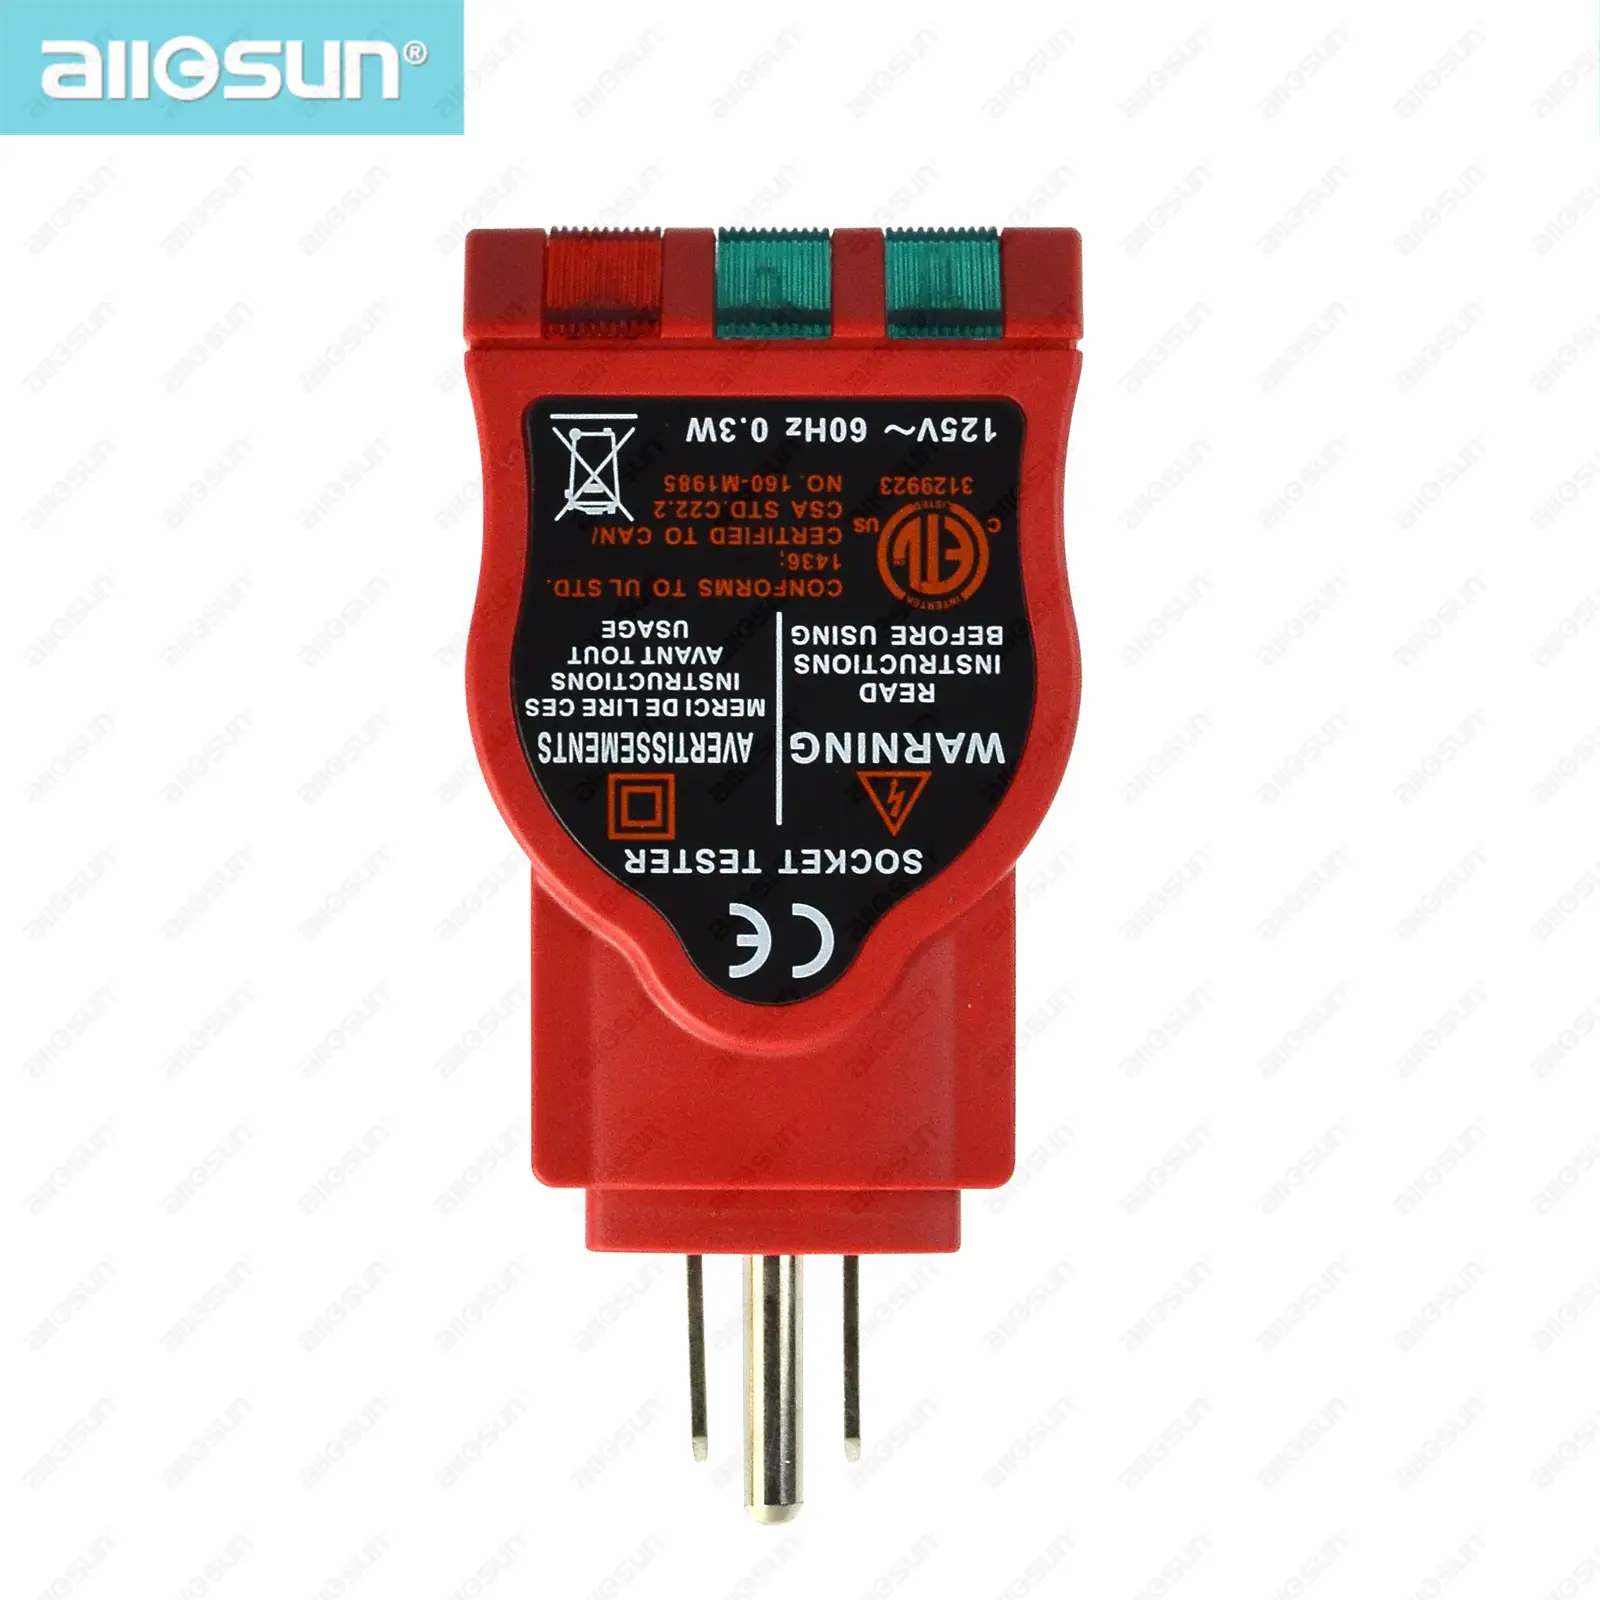 Allosun EM9807 GFCI Socket Tester Household Electrical Safety Kit GFCI TESTER outlet tester